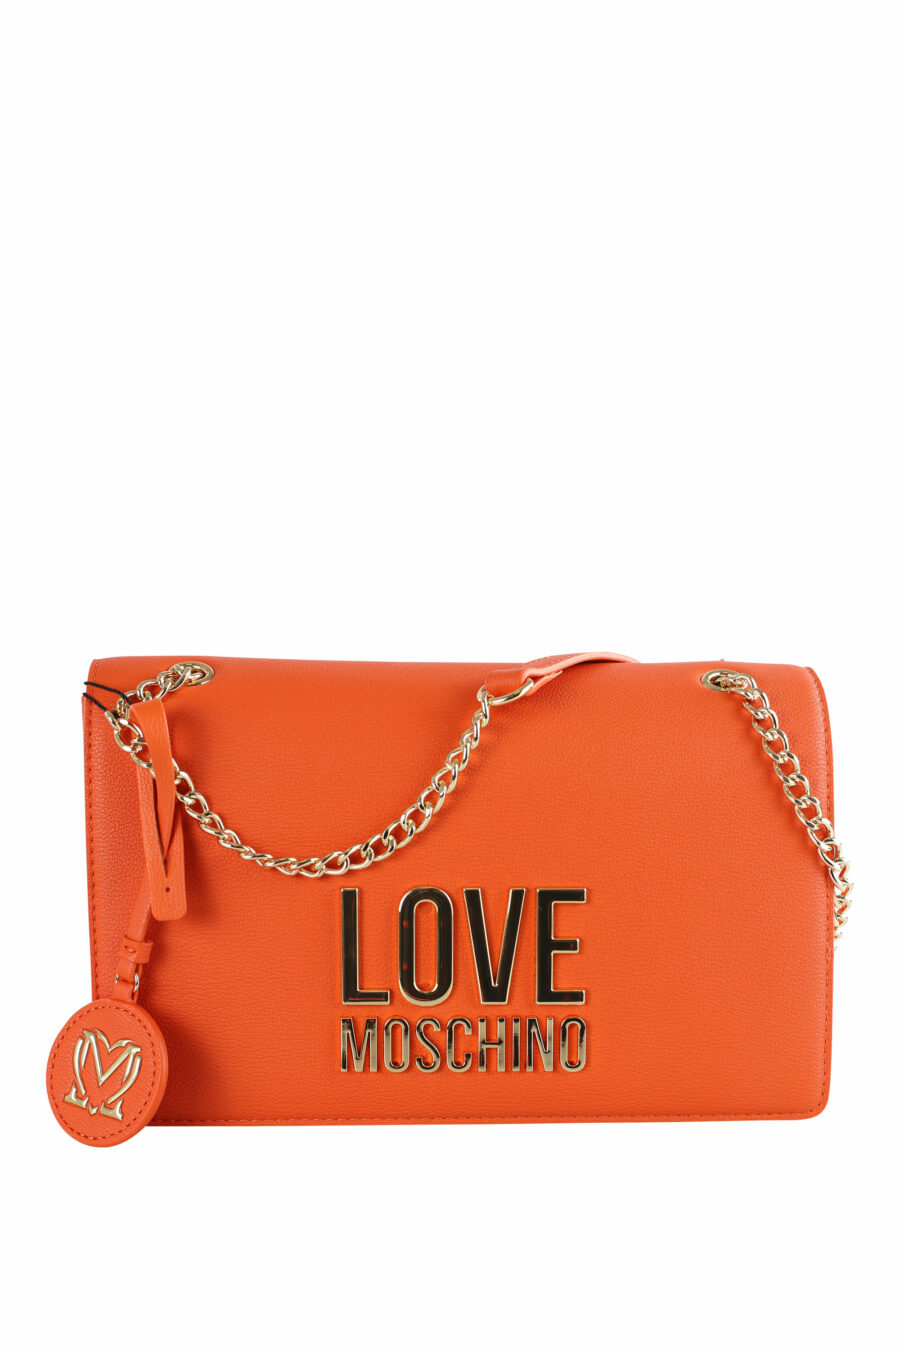 Orange shoulder bag with chain and lettering logo - IMG 3654